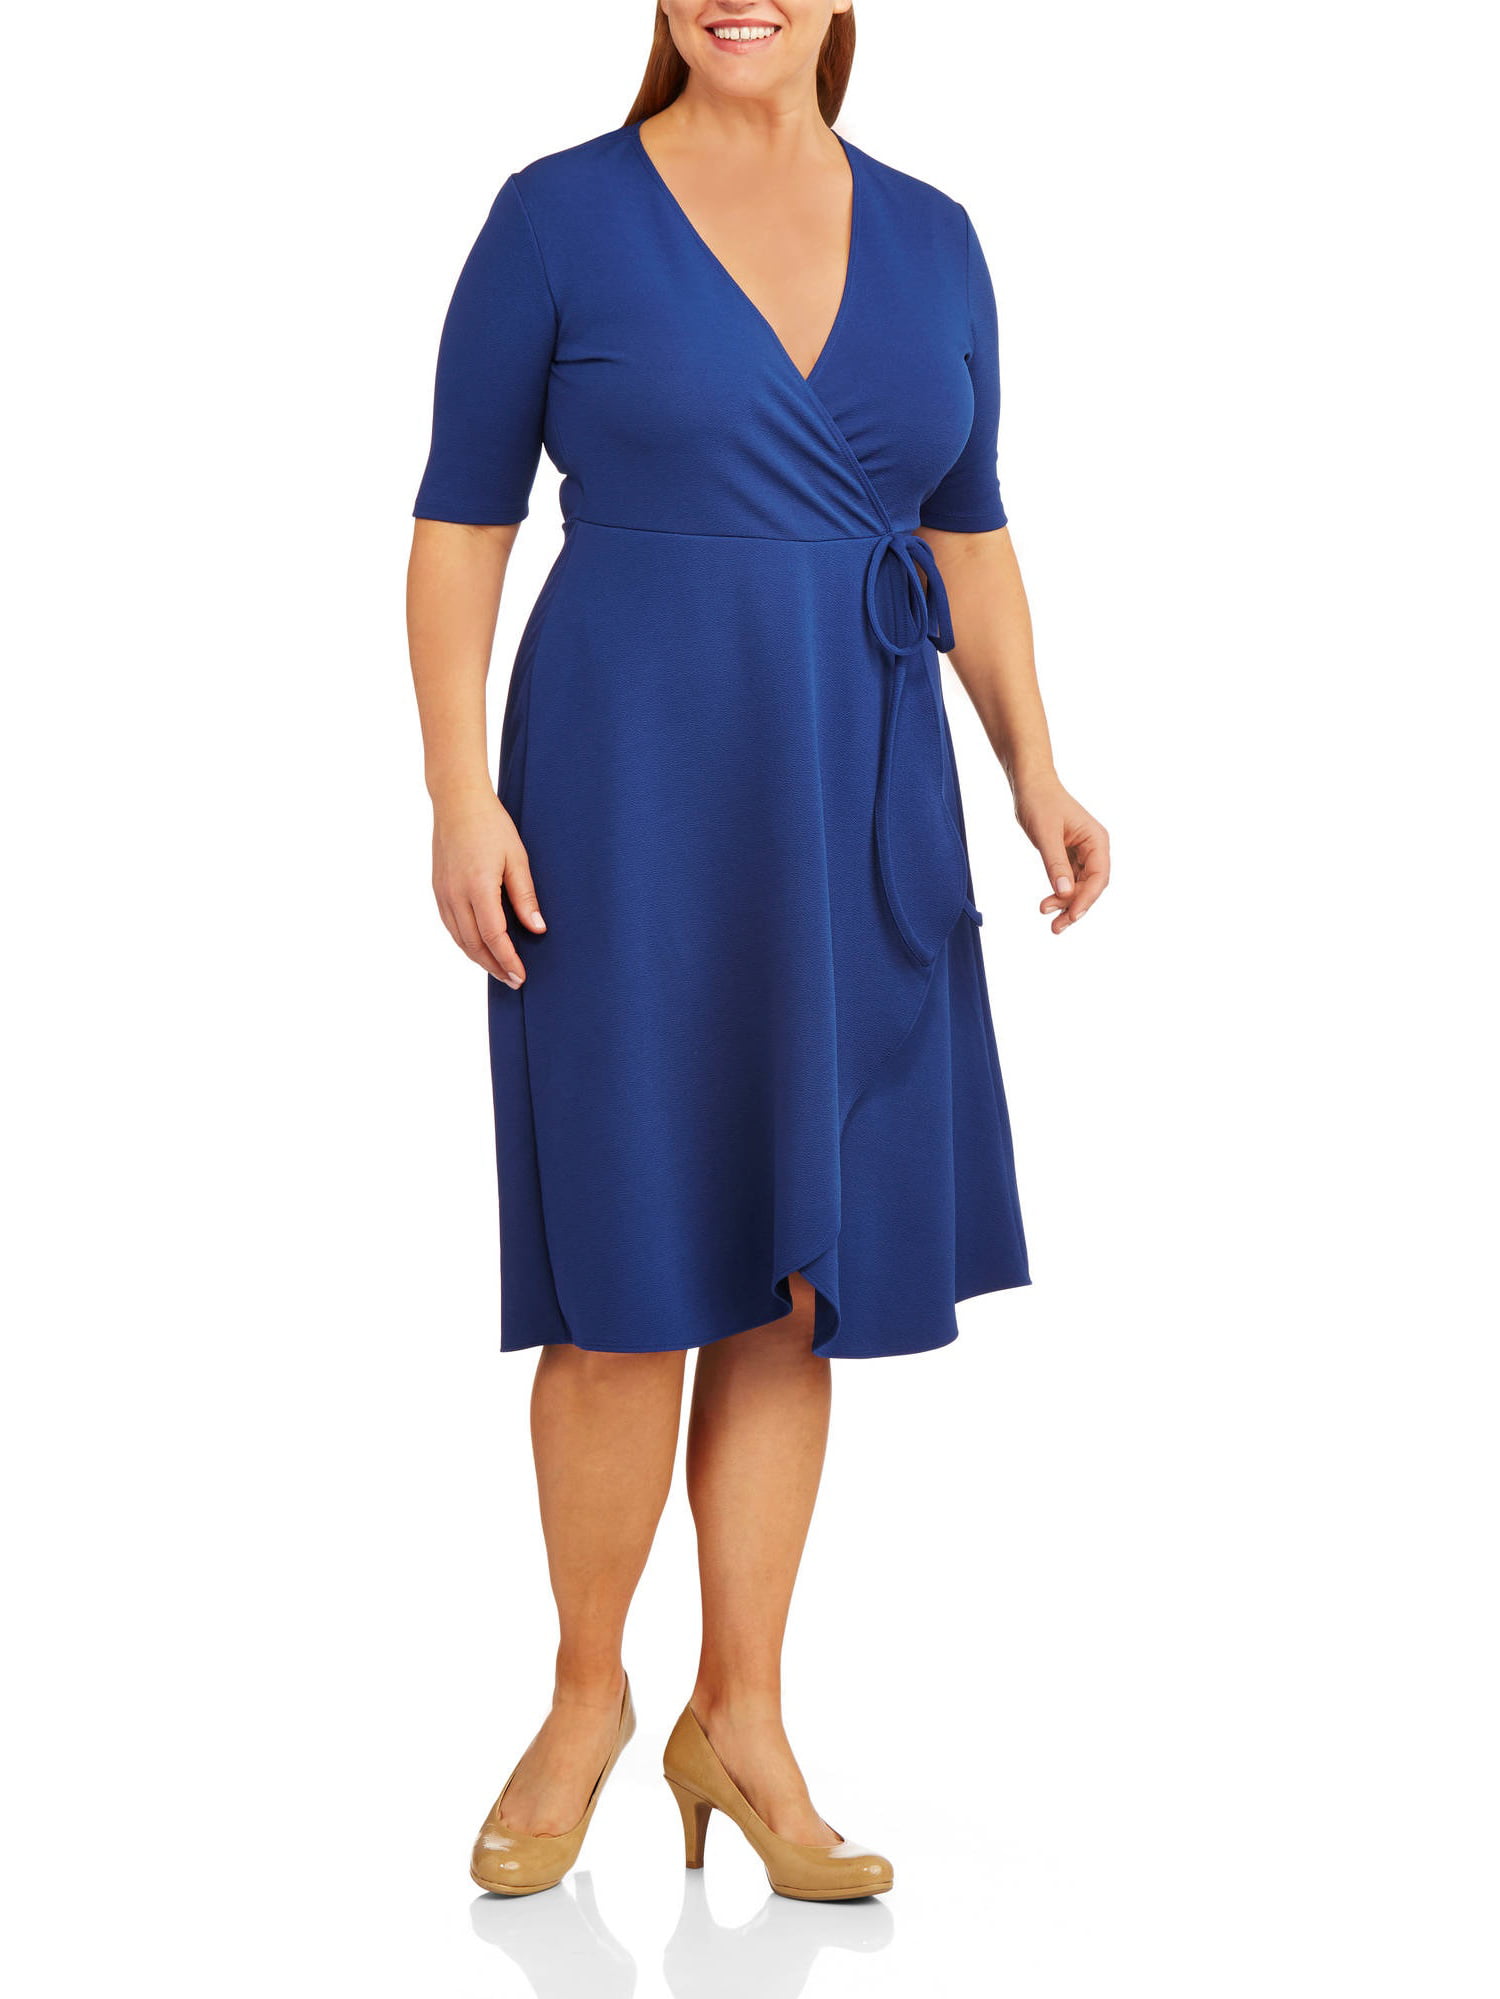 Women's Plus-Size Wrap Dress - Walmart.com